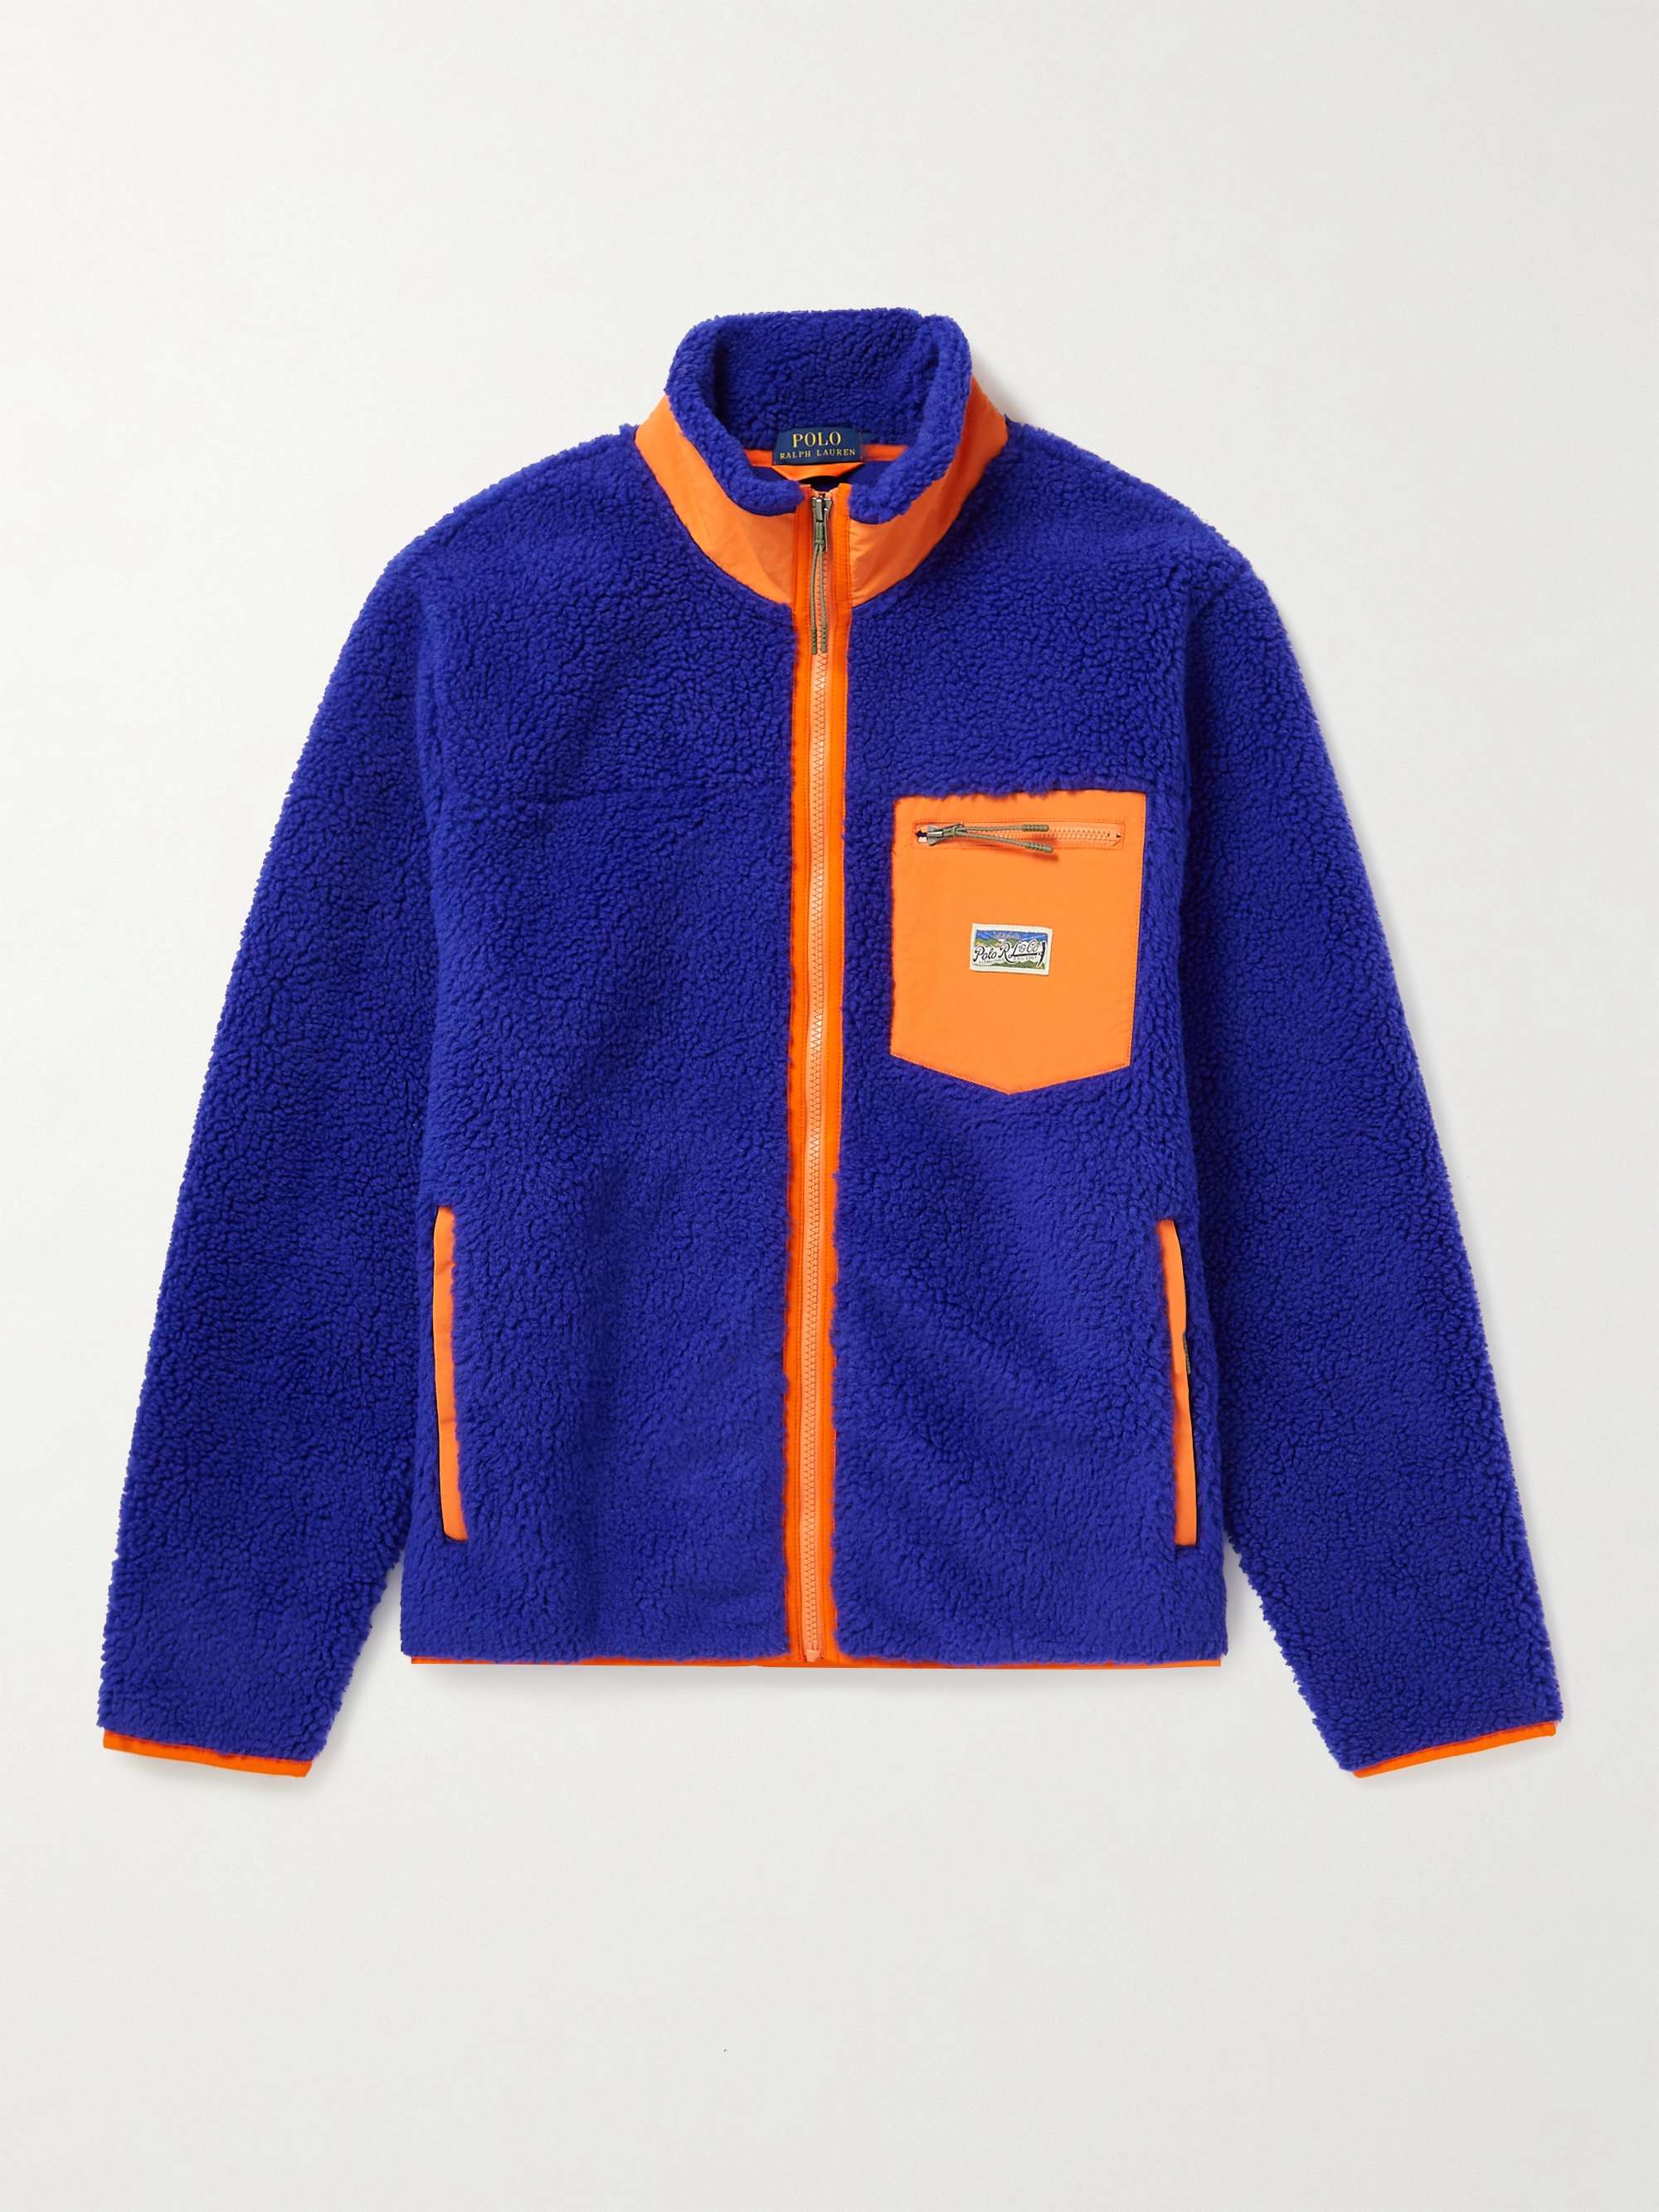 POLO RALPH LAUREN Logo-Appliqued Shell-Trimmed Fleece Jacket,Blue